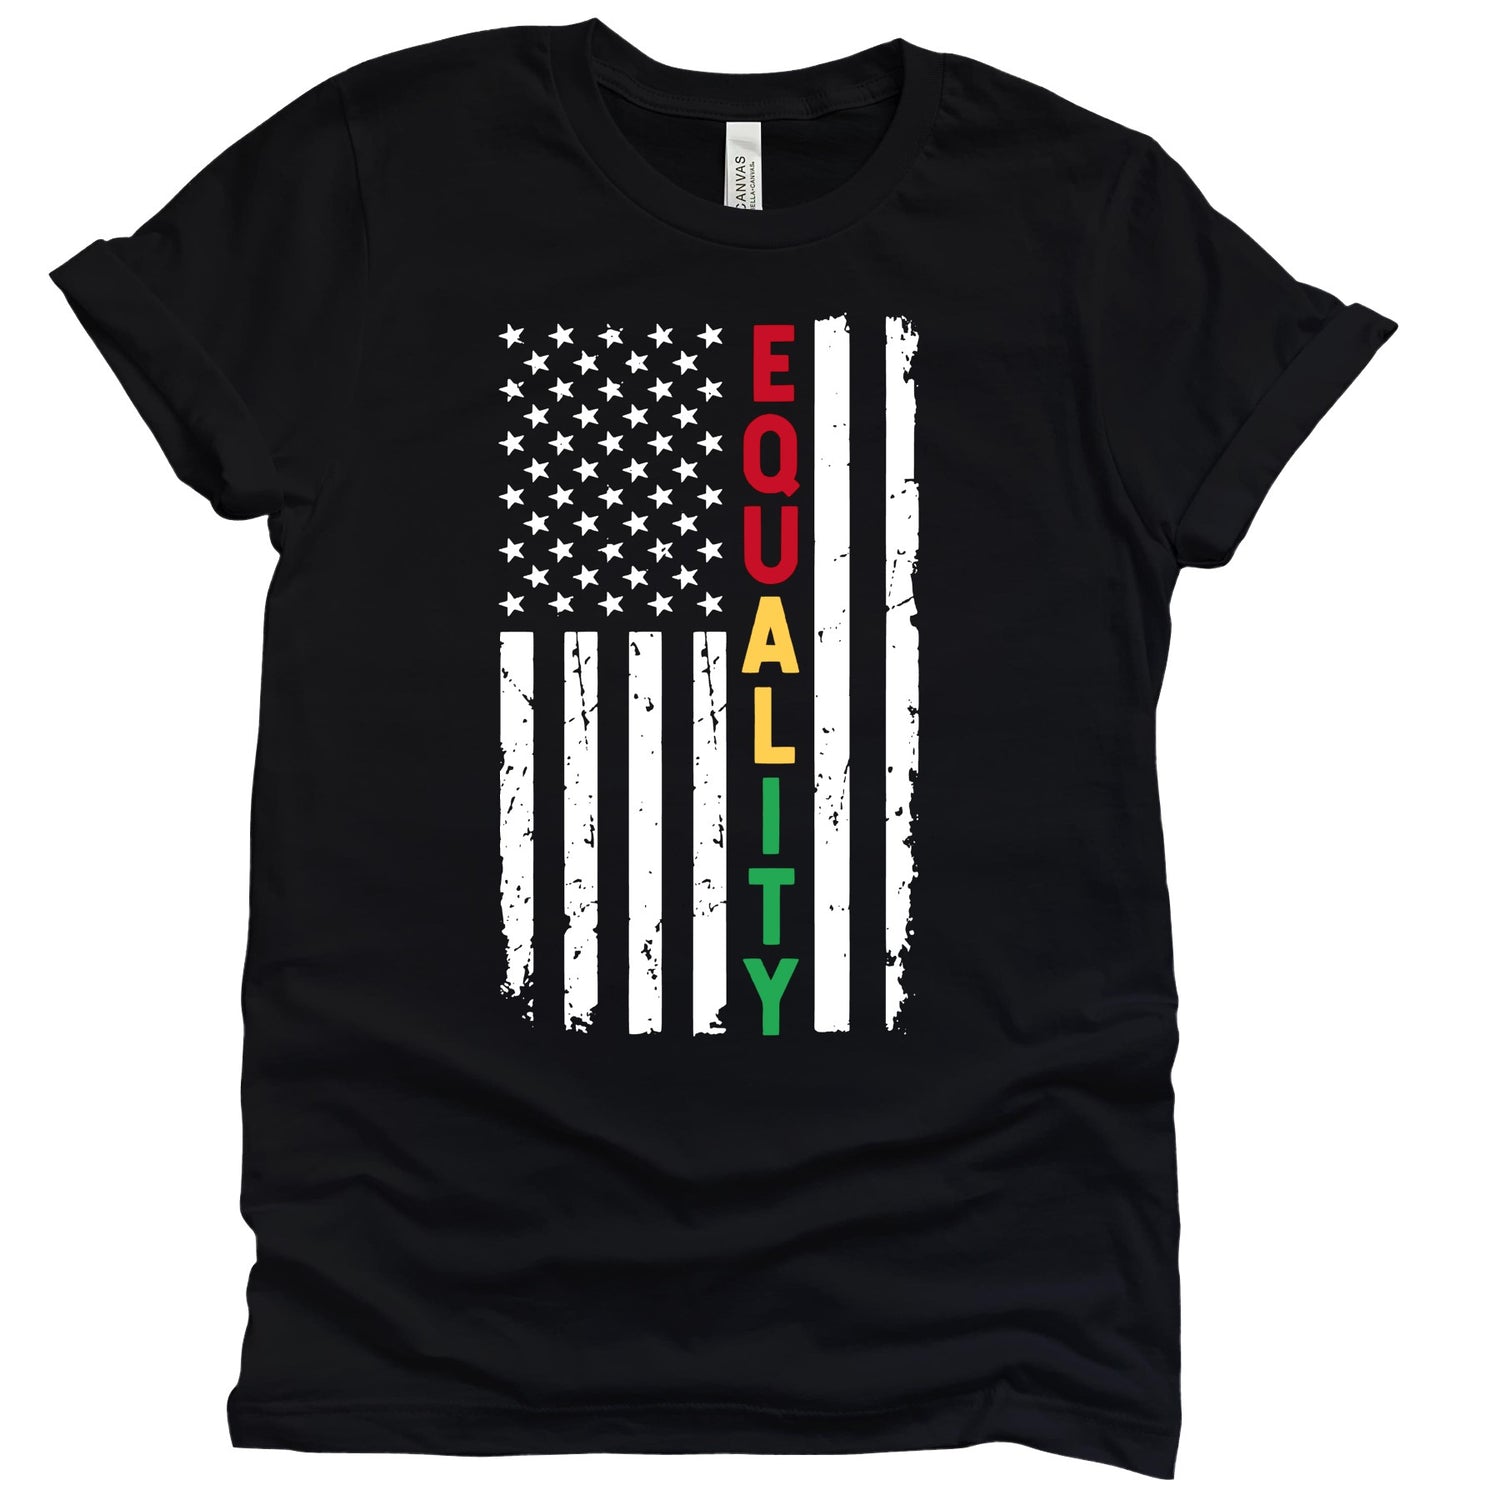 Profyle District - Equality Flag - T-Shirts - Black